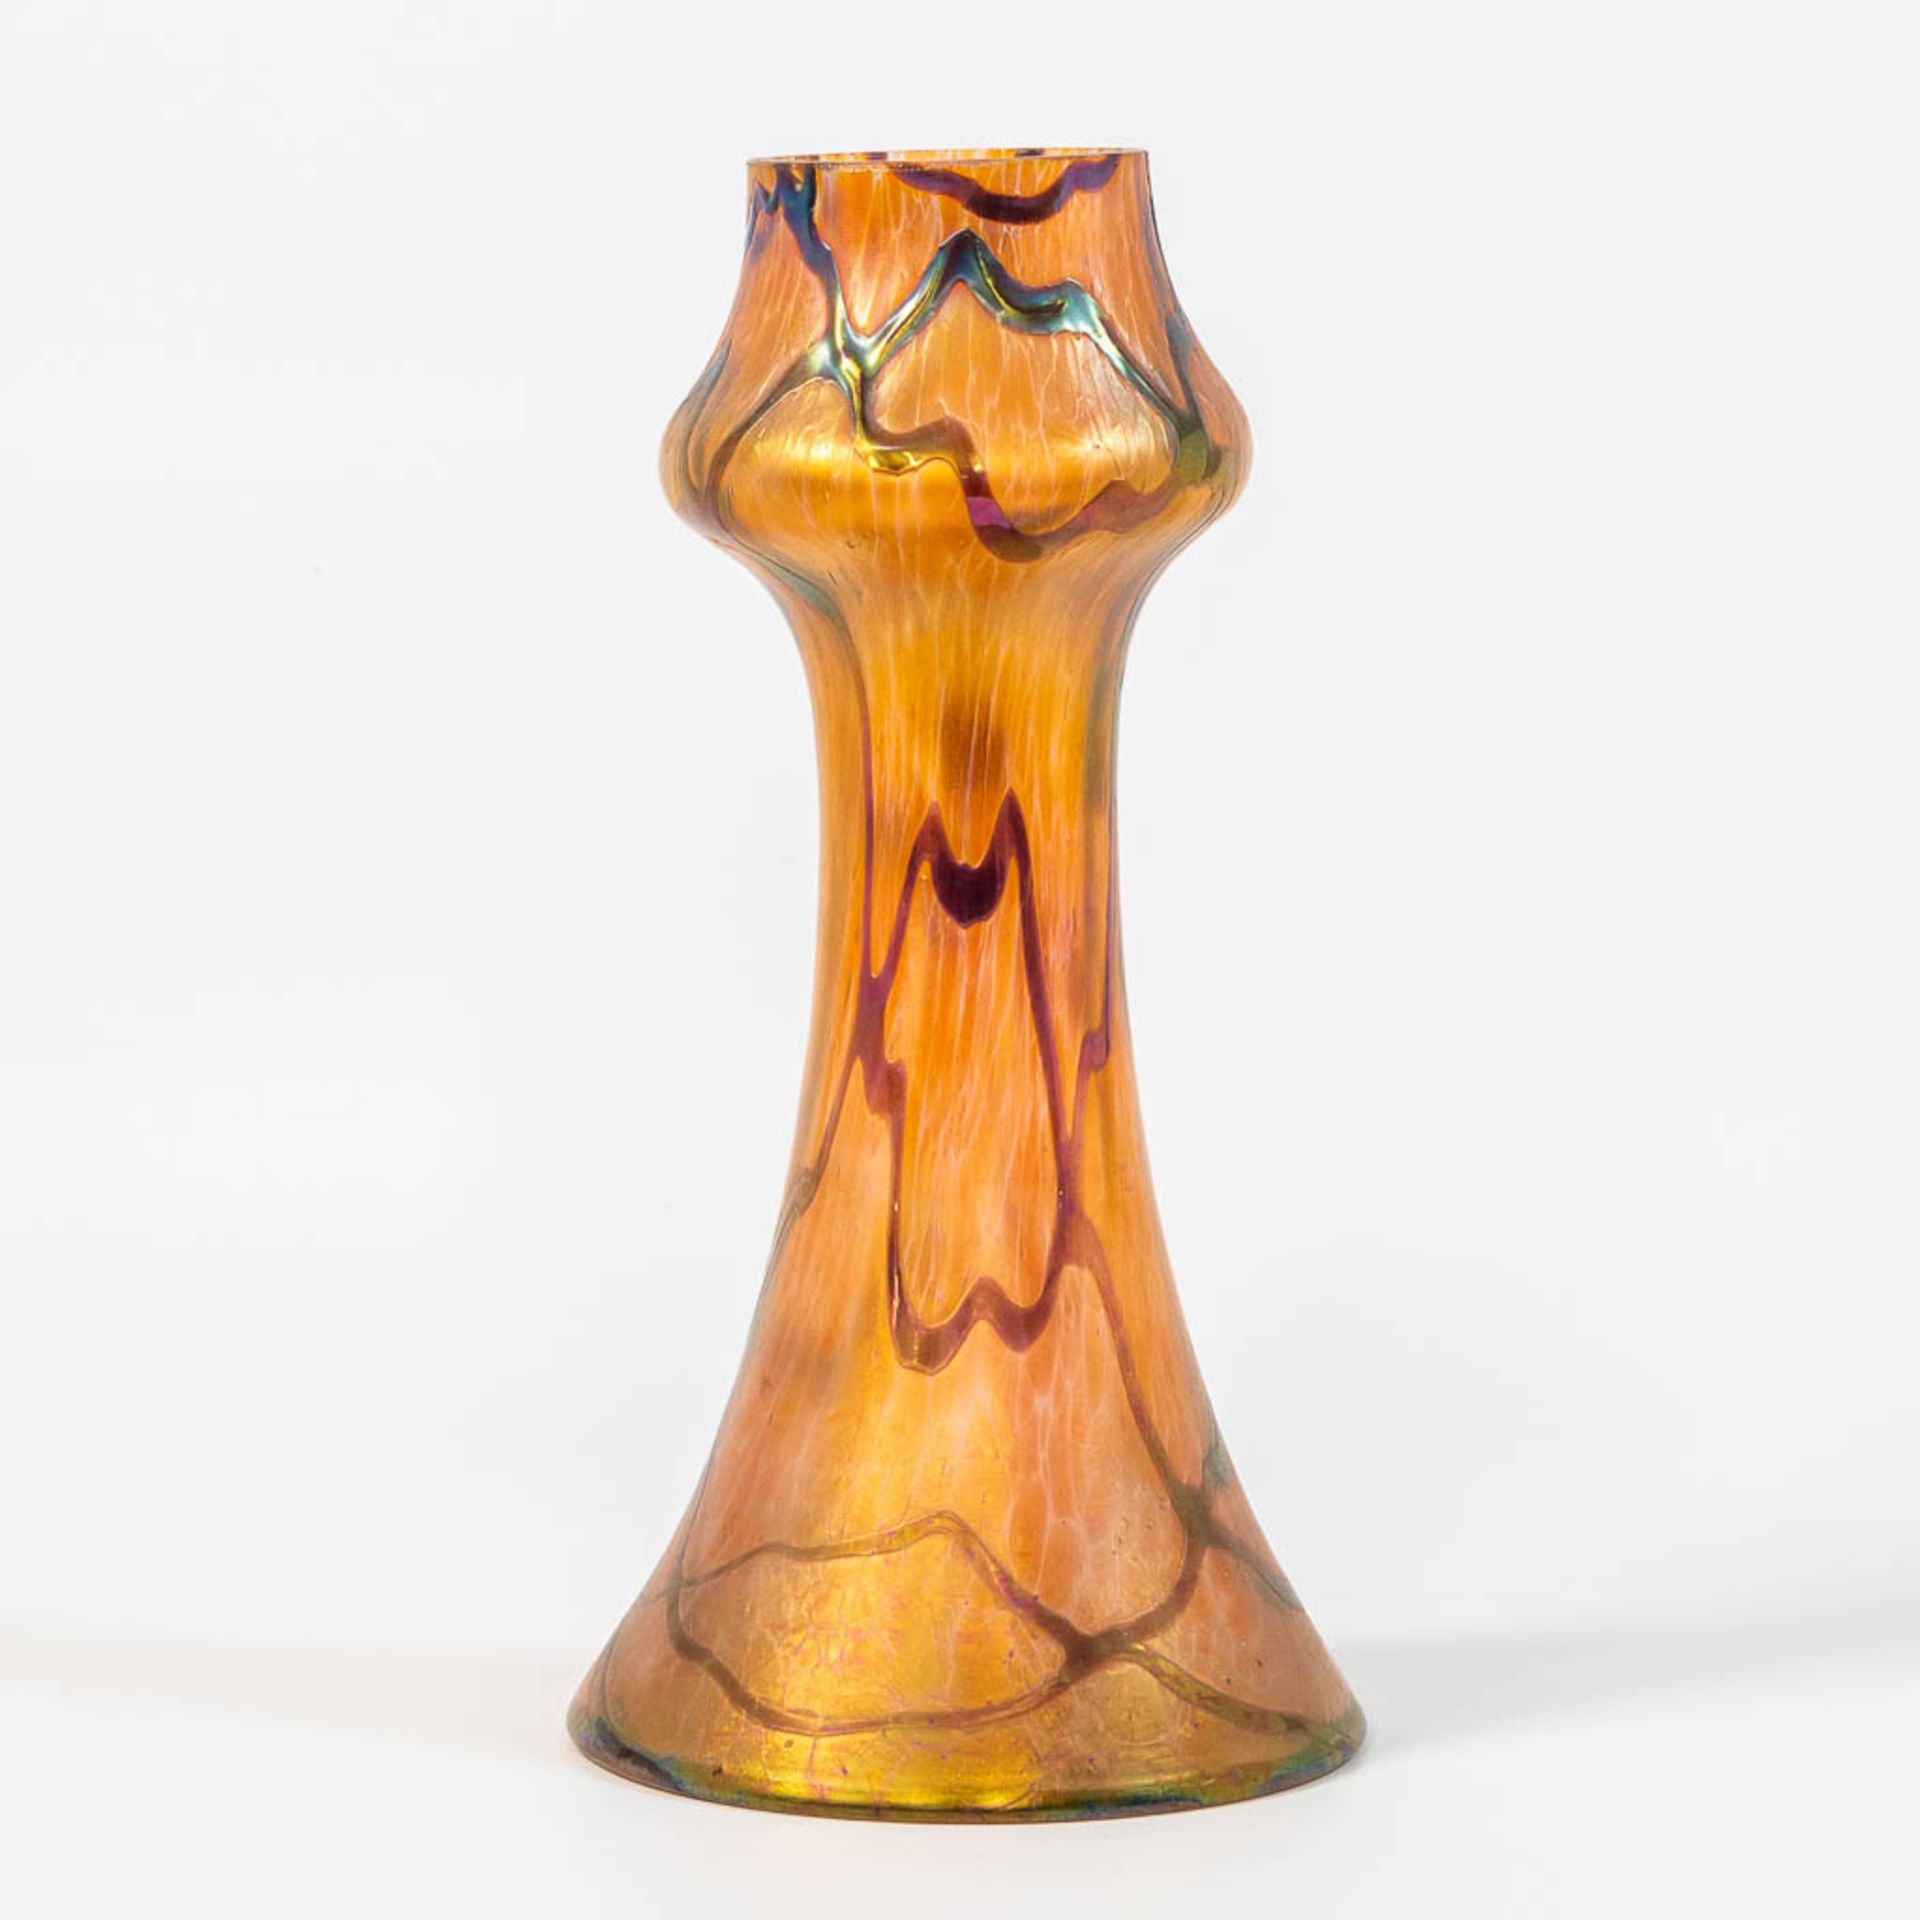 Johann LOETZ (1880-1940) A Pate de verre vase in art nouveau style, 1900s - Image 5 of 8